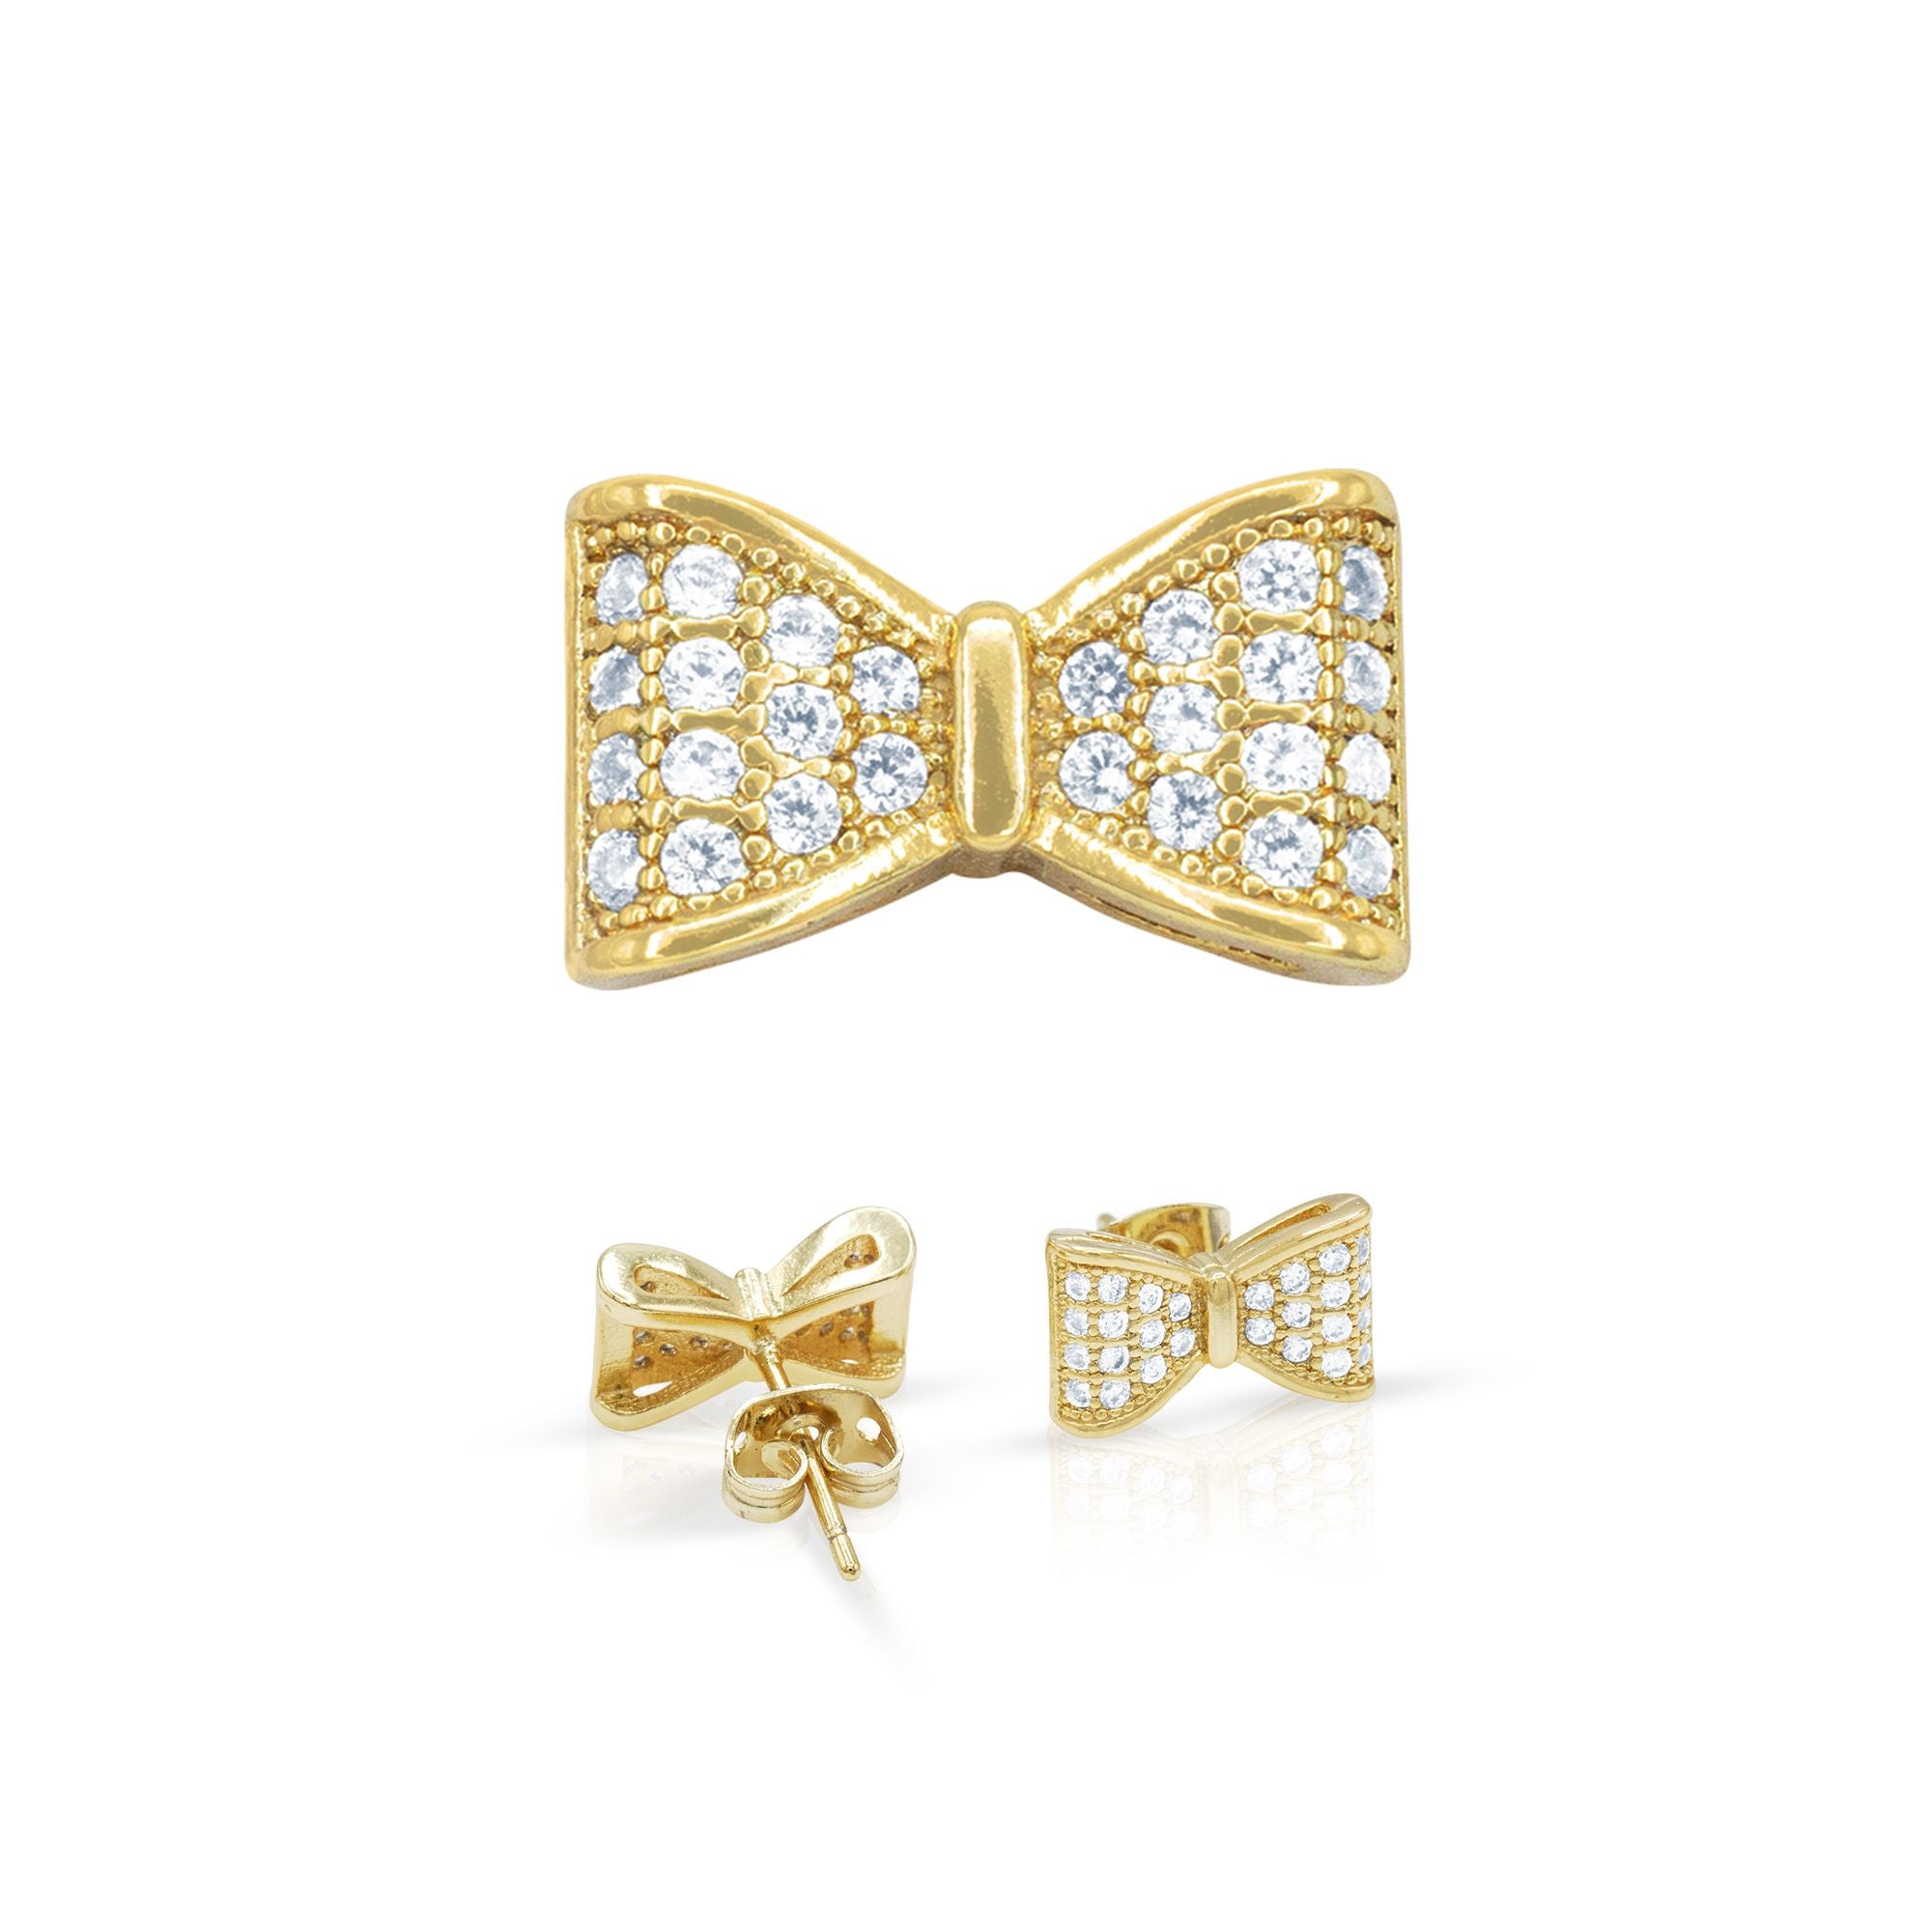 Bow Tie 14K Gold Filled Earrings Cubic Zirconia Hip Hop Studs